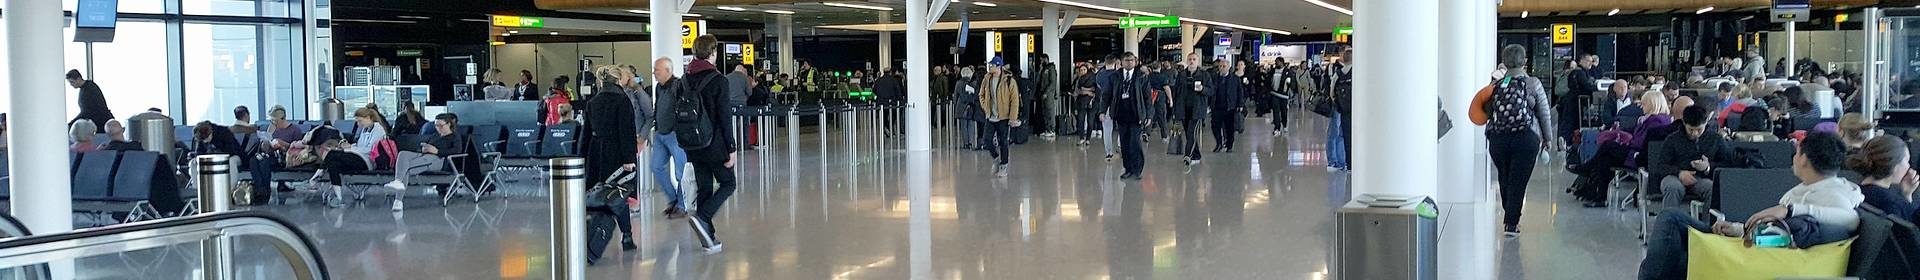 Busy terminal at Heathrow airport